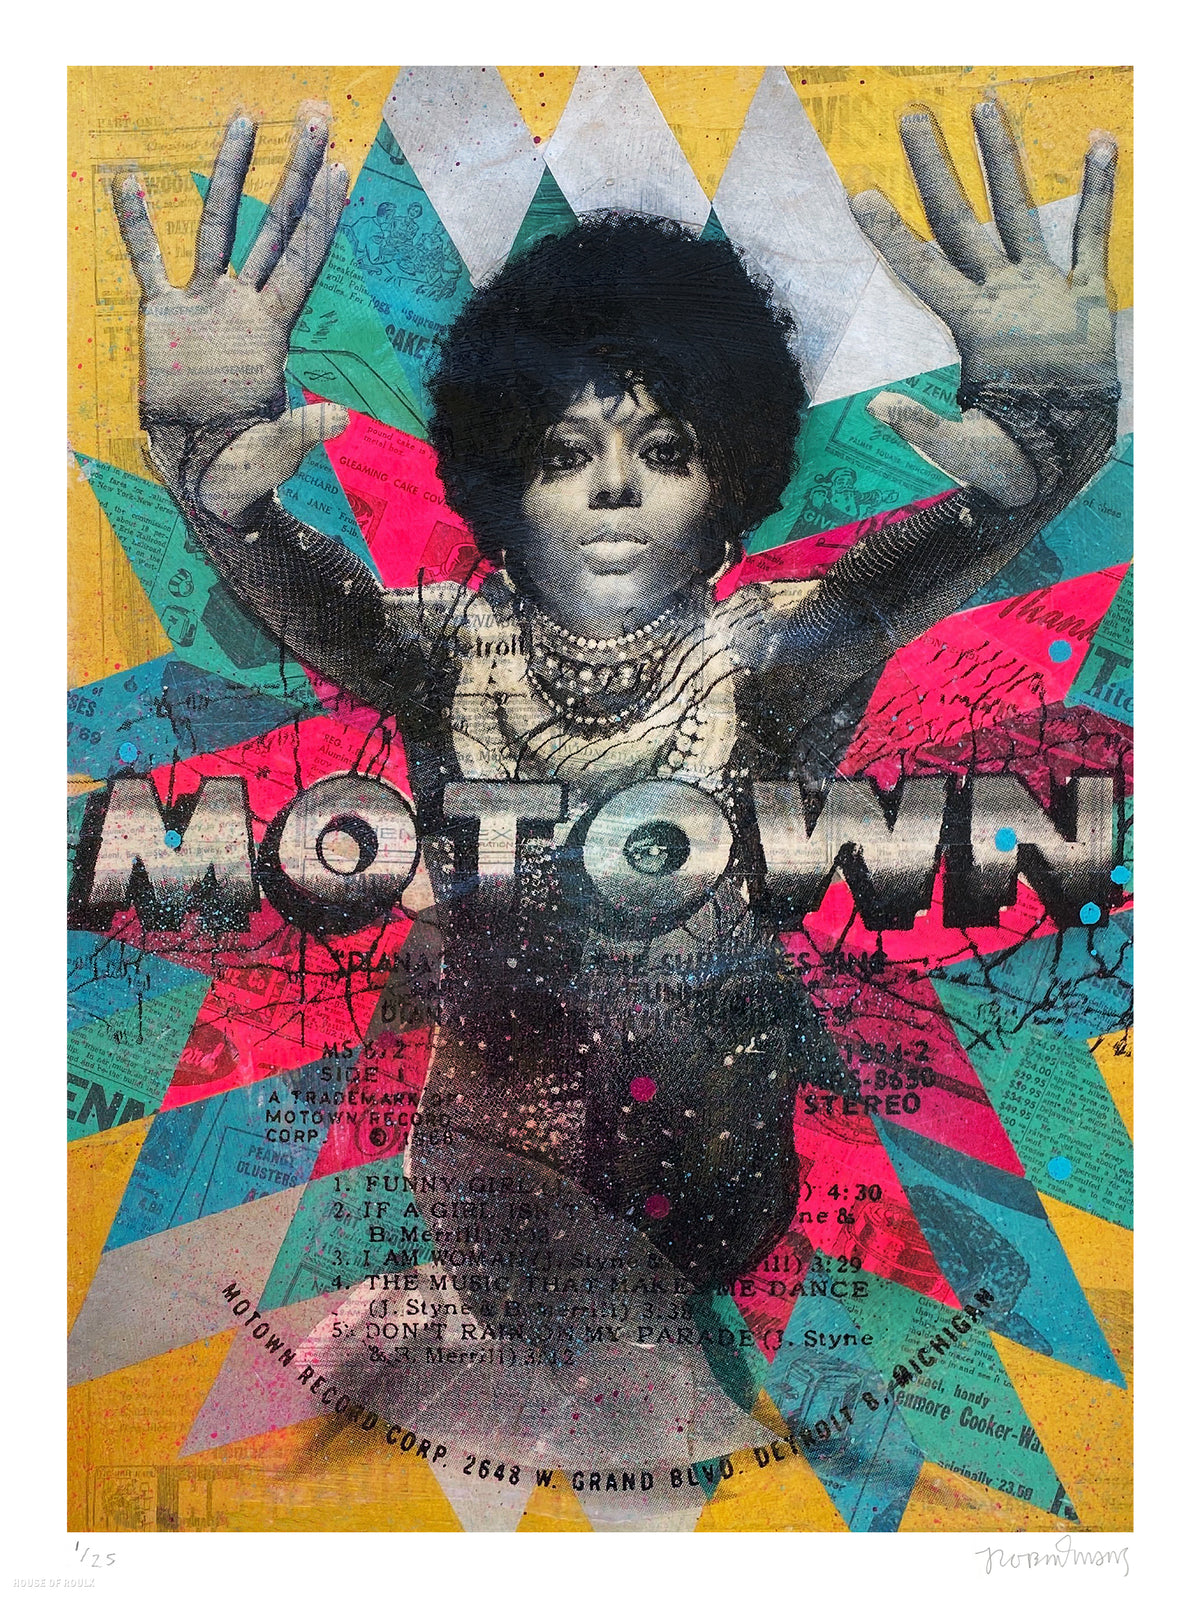 Robert Mars &quot;Motown&quot; - Archival Print, Edition of 25 - 18 x 24&quot;